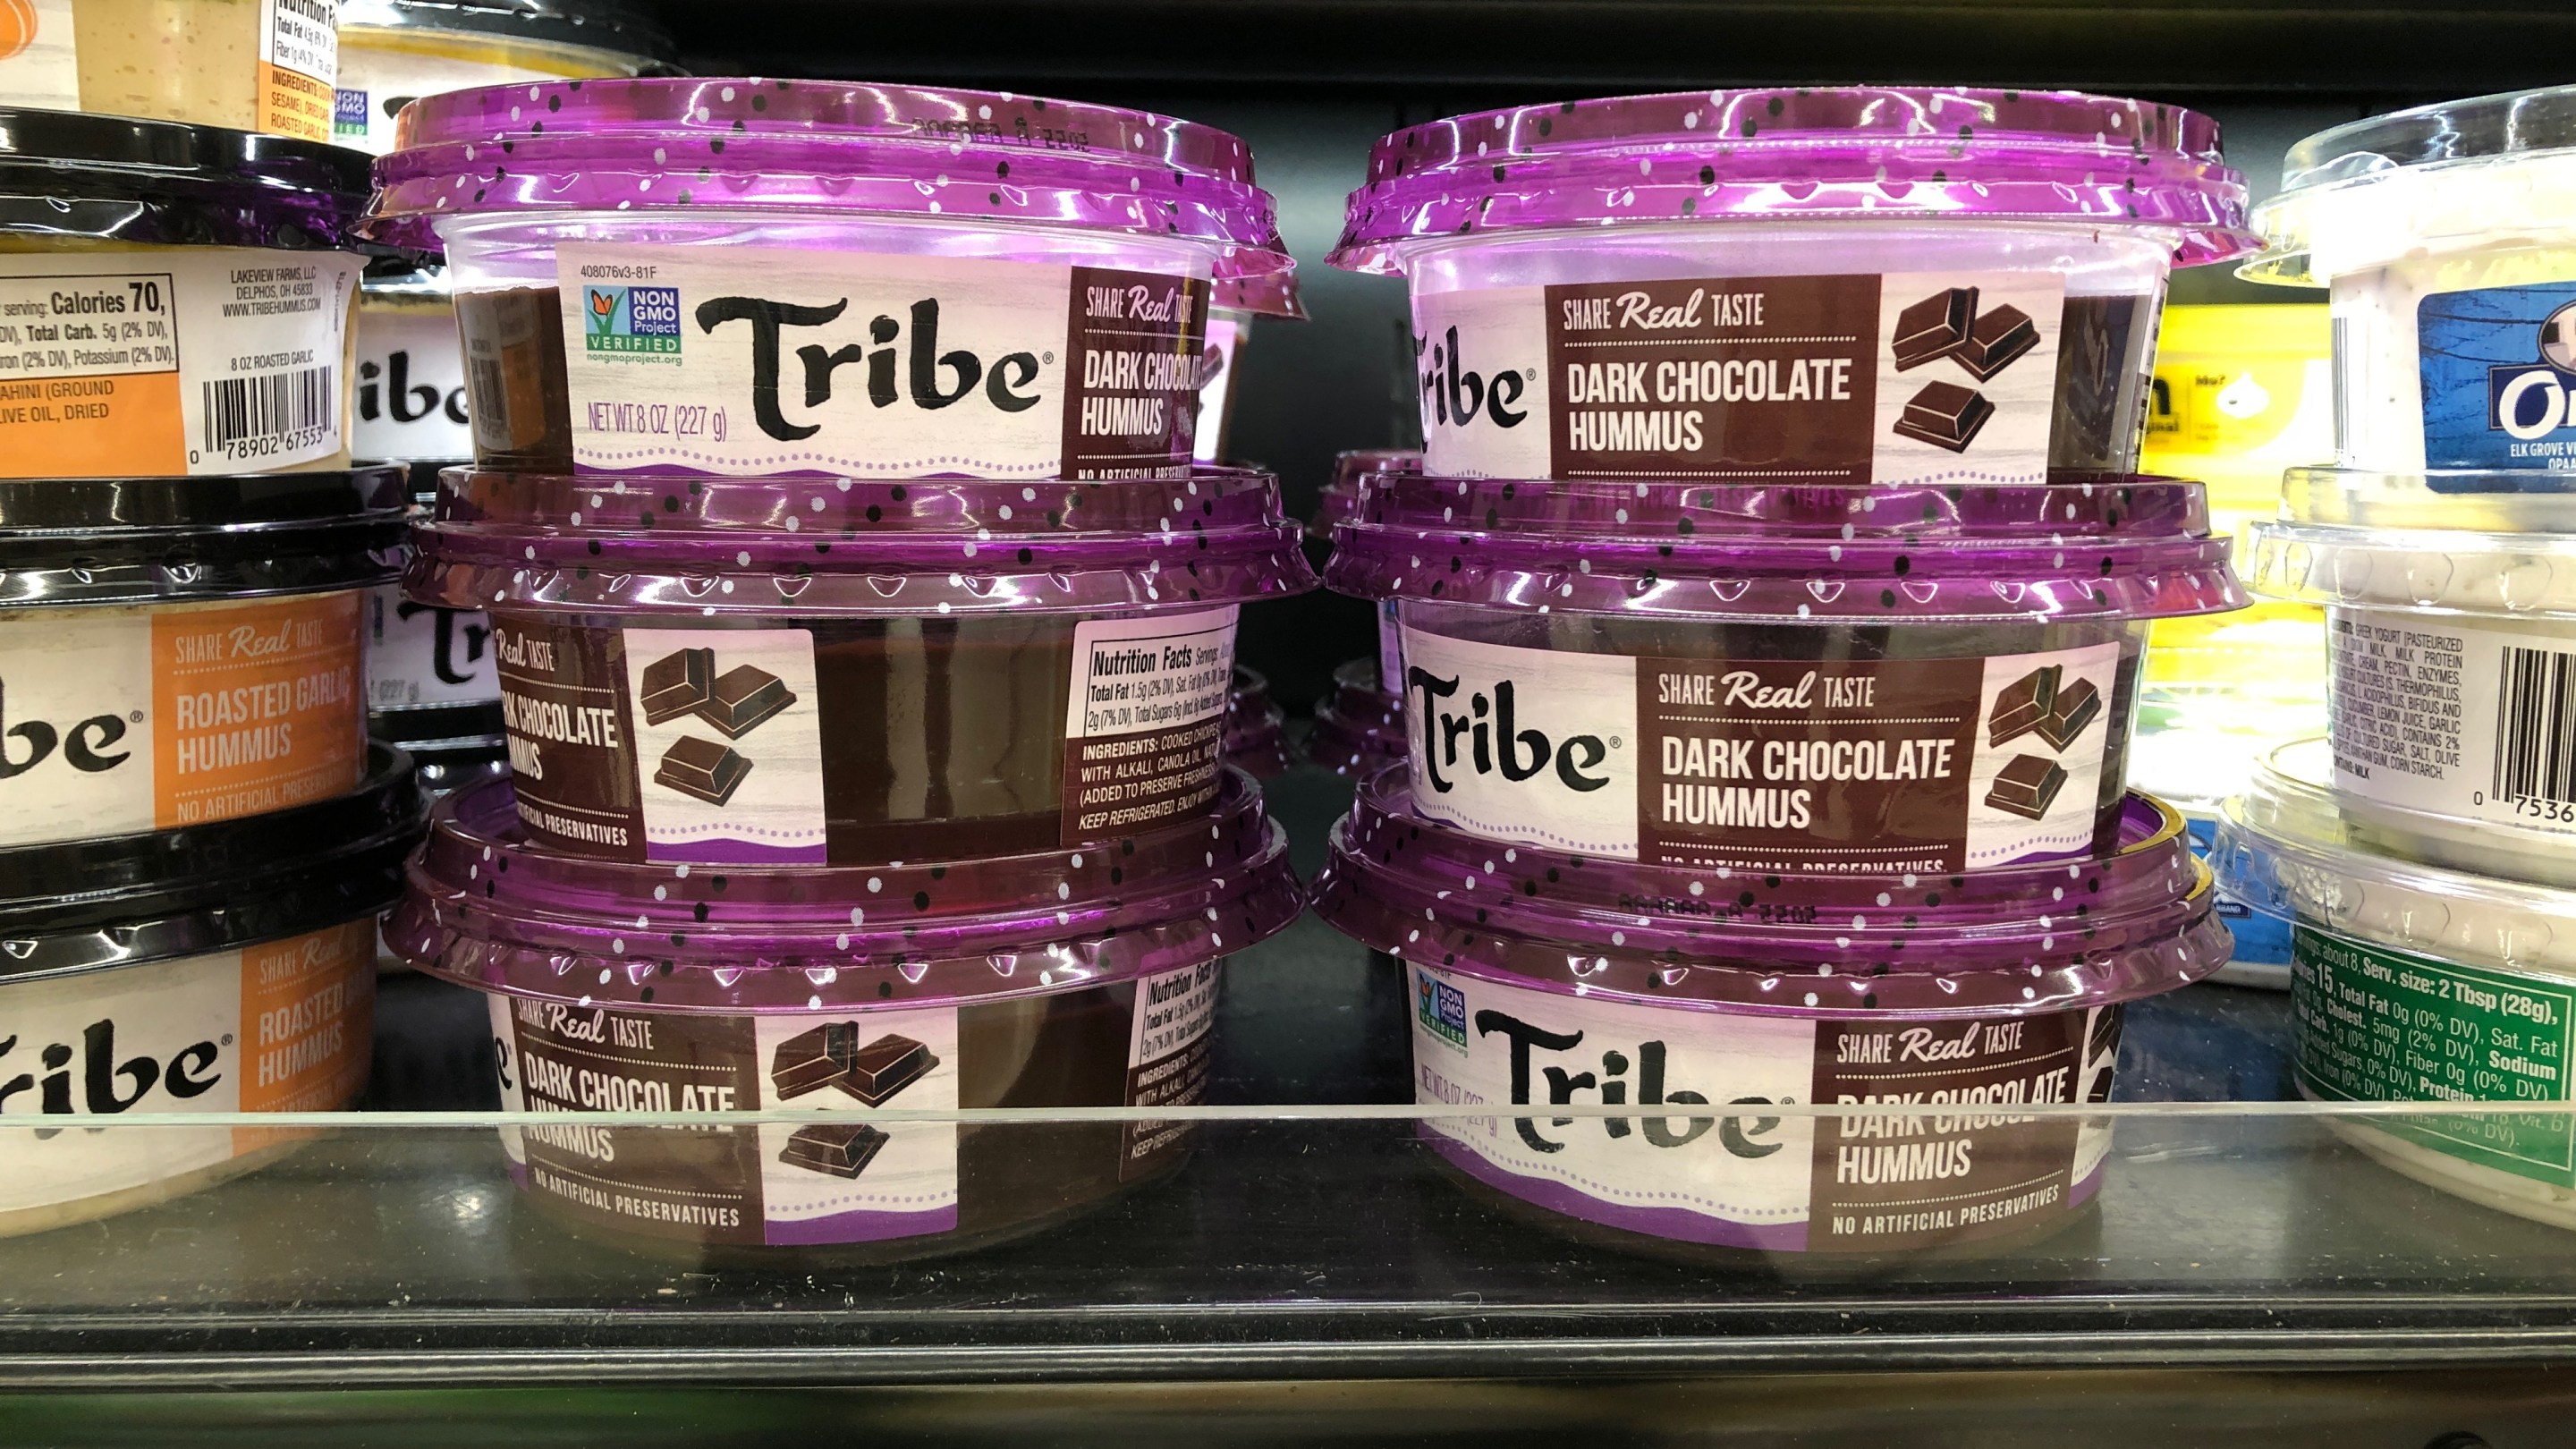 tribe brand dark chocolate hummus at cub supermarket